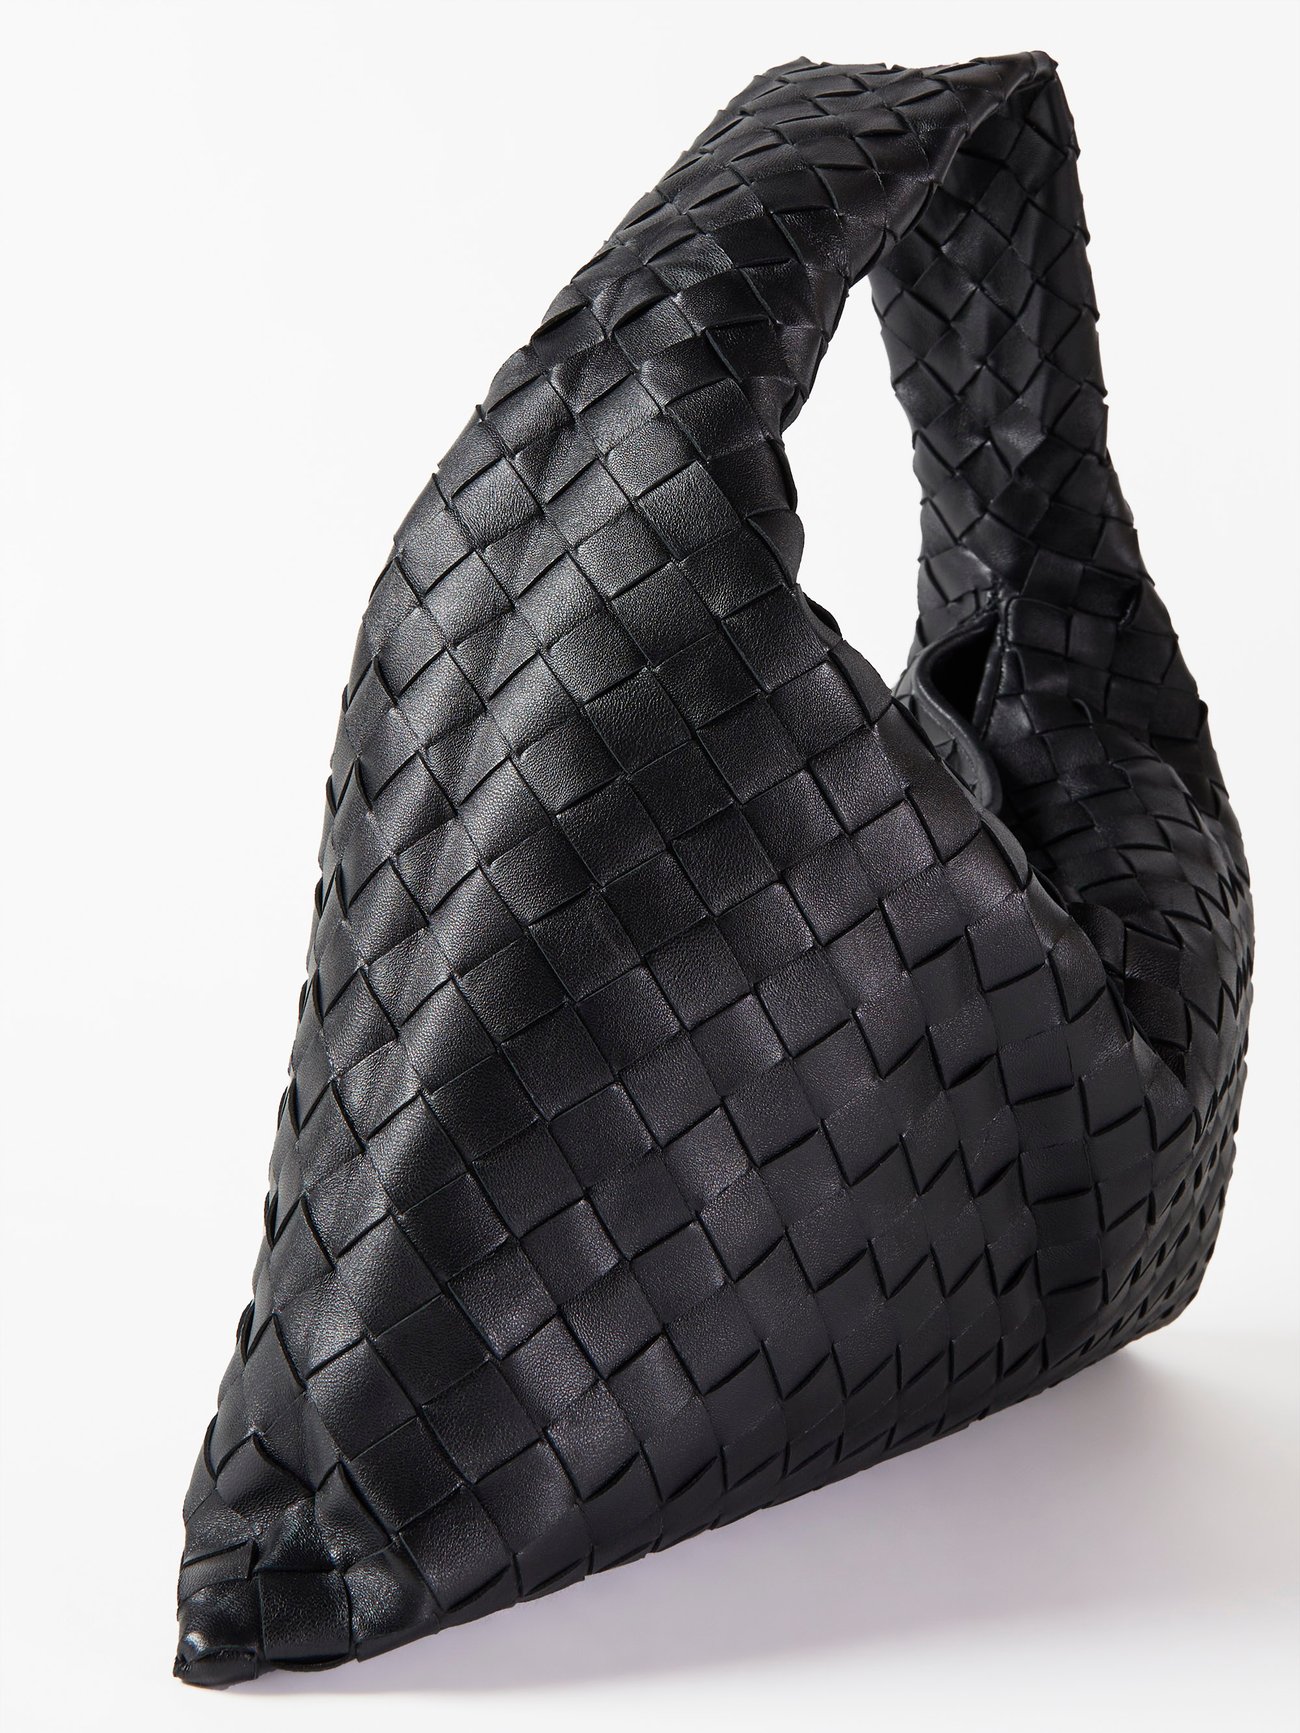 Nodini small Intrecciato leather cross-body bag, Bottega Veneta, MATCHESFASHION.COM US in 2023